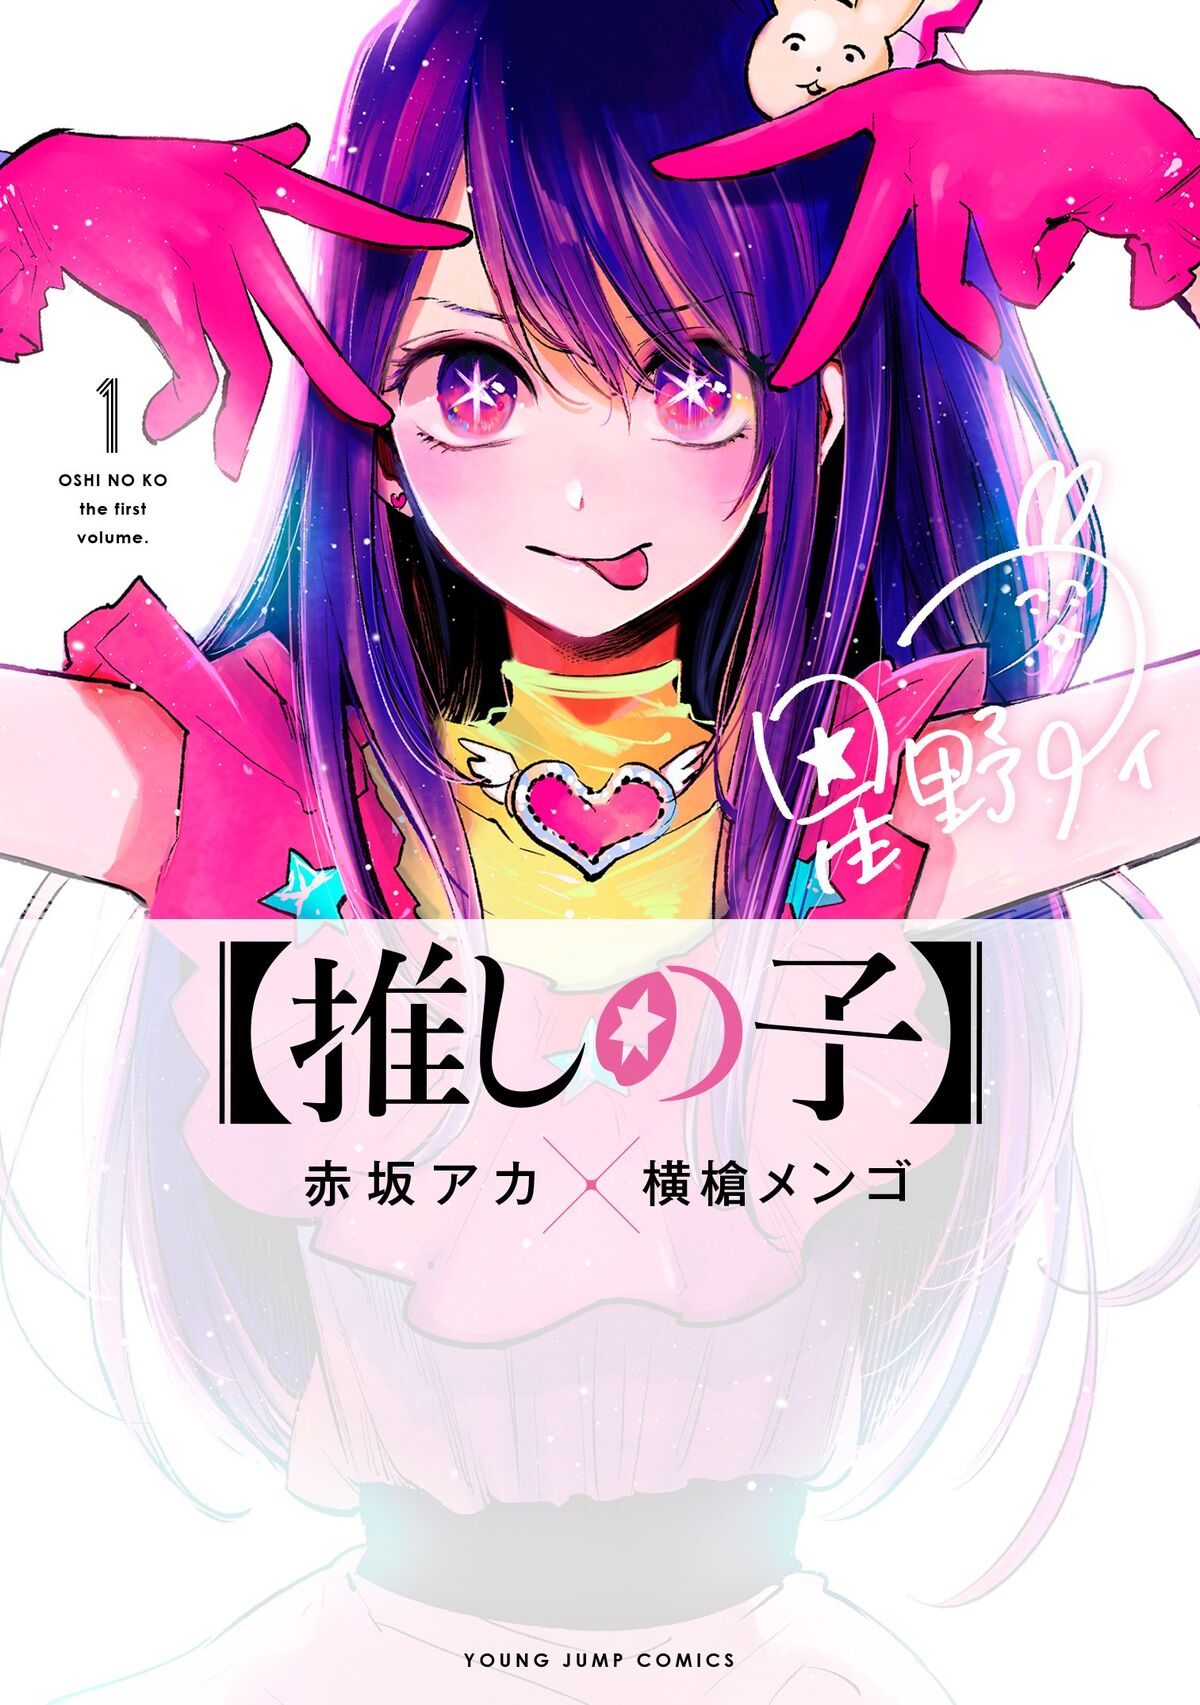 OSHI NO KO Chapter 85 - Calculation - READ OSHI NO KO Manga Online